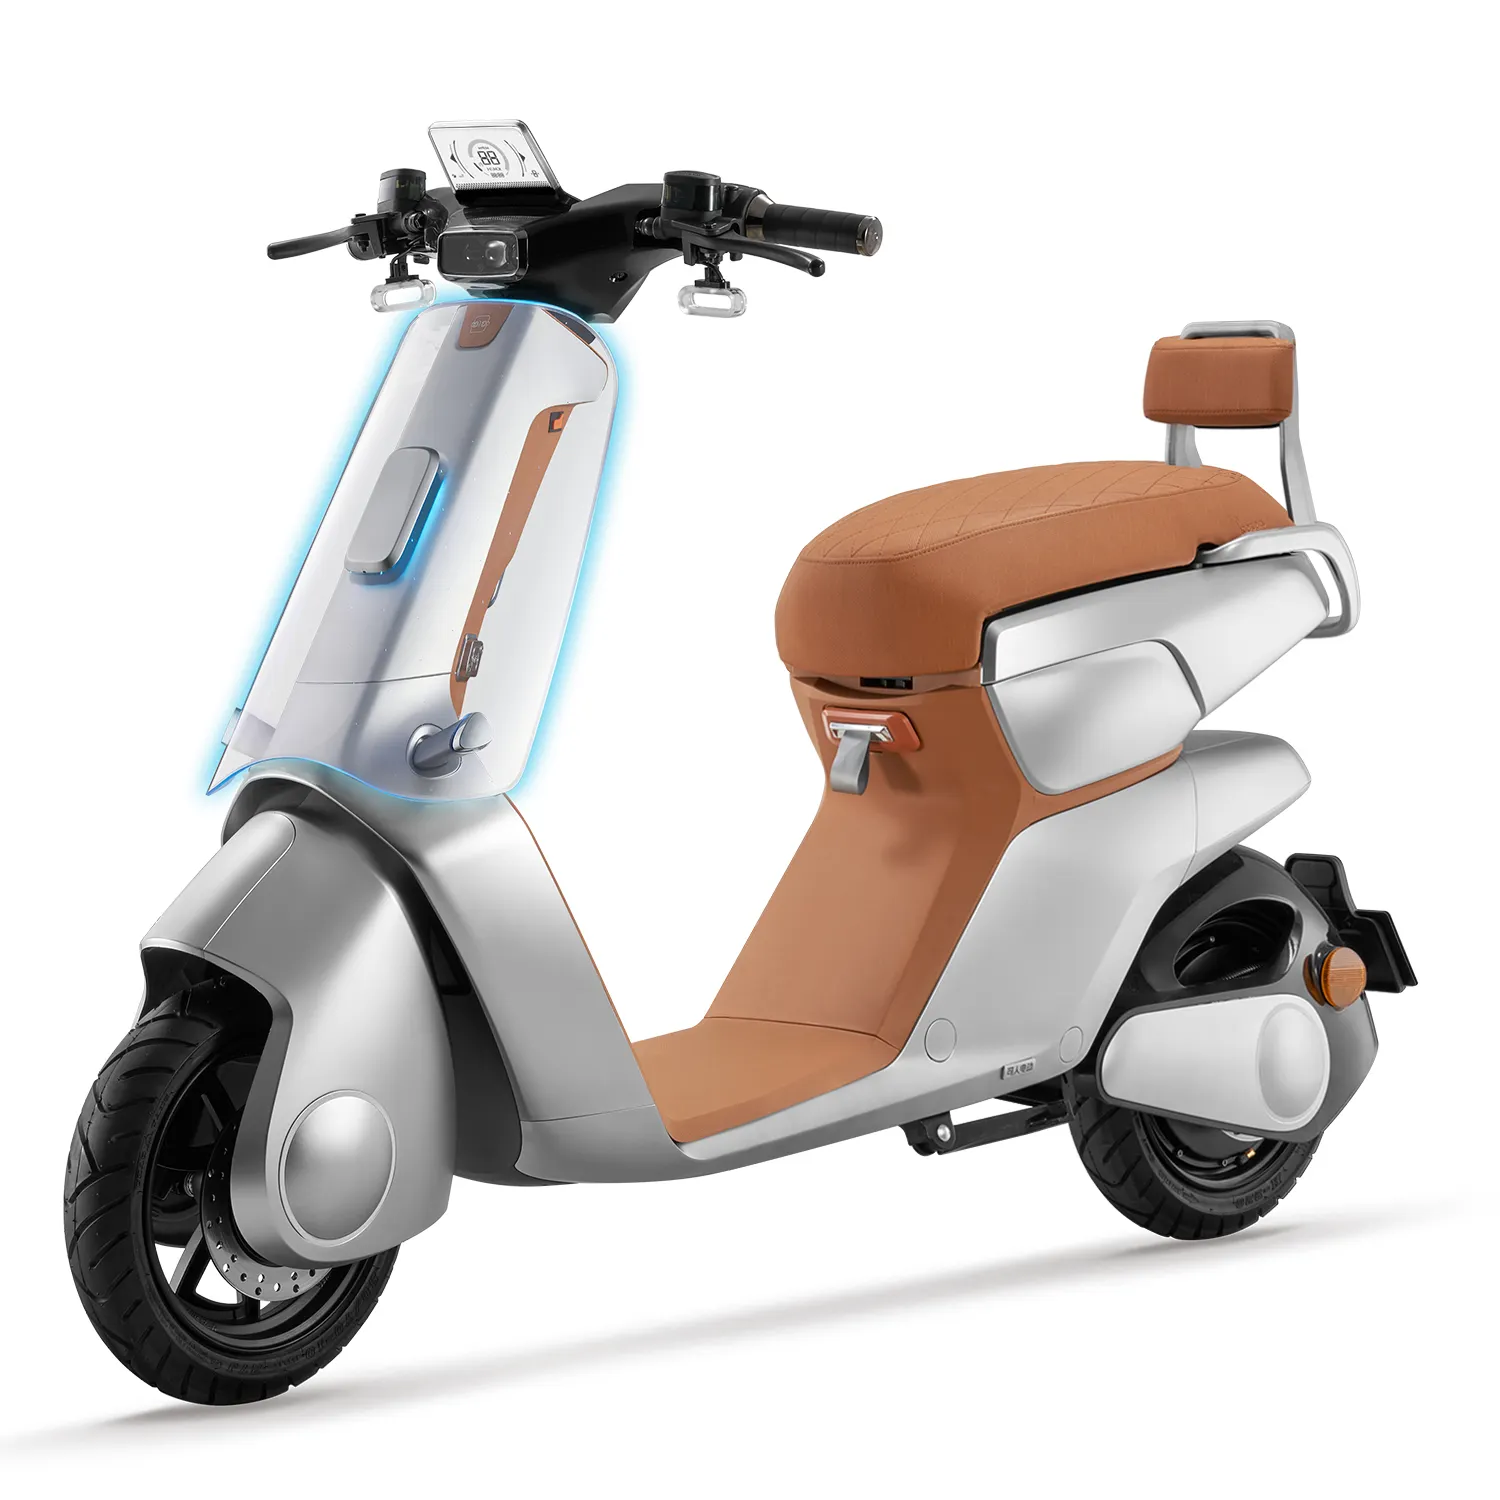 Keren नई डिजाइन 7 रंग लाइट ढाल ईवी मोटरबाइक लिथियम बैटरी मोटर साइकिल बिजली की मोटर साइकिल के लिए बिक्री